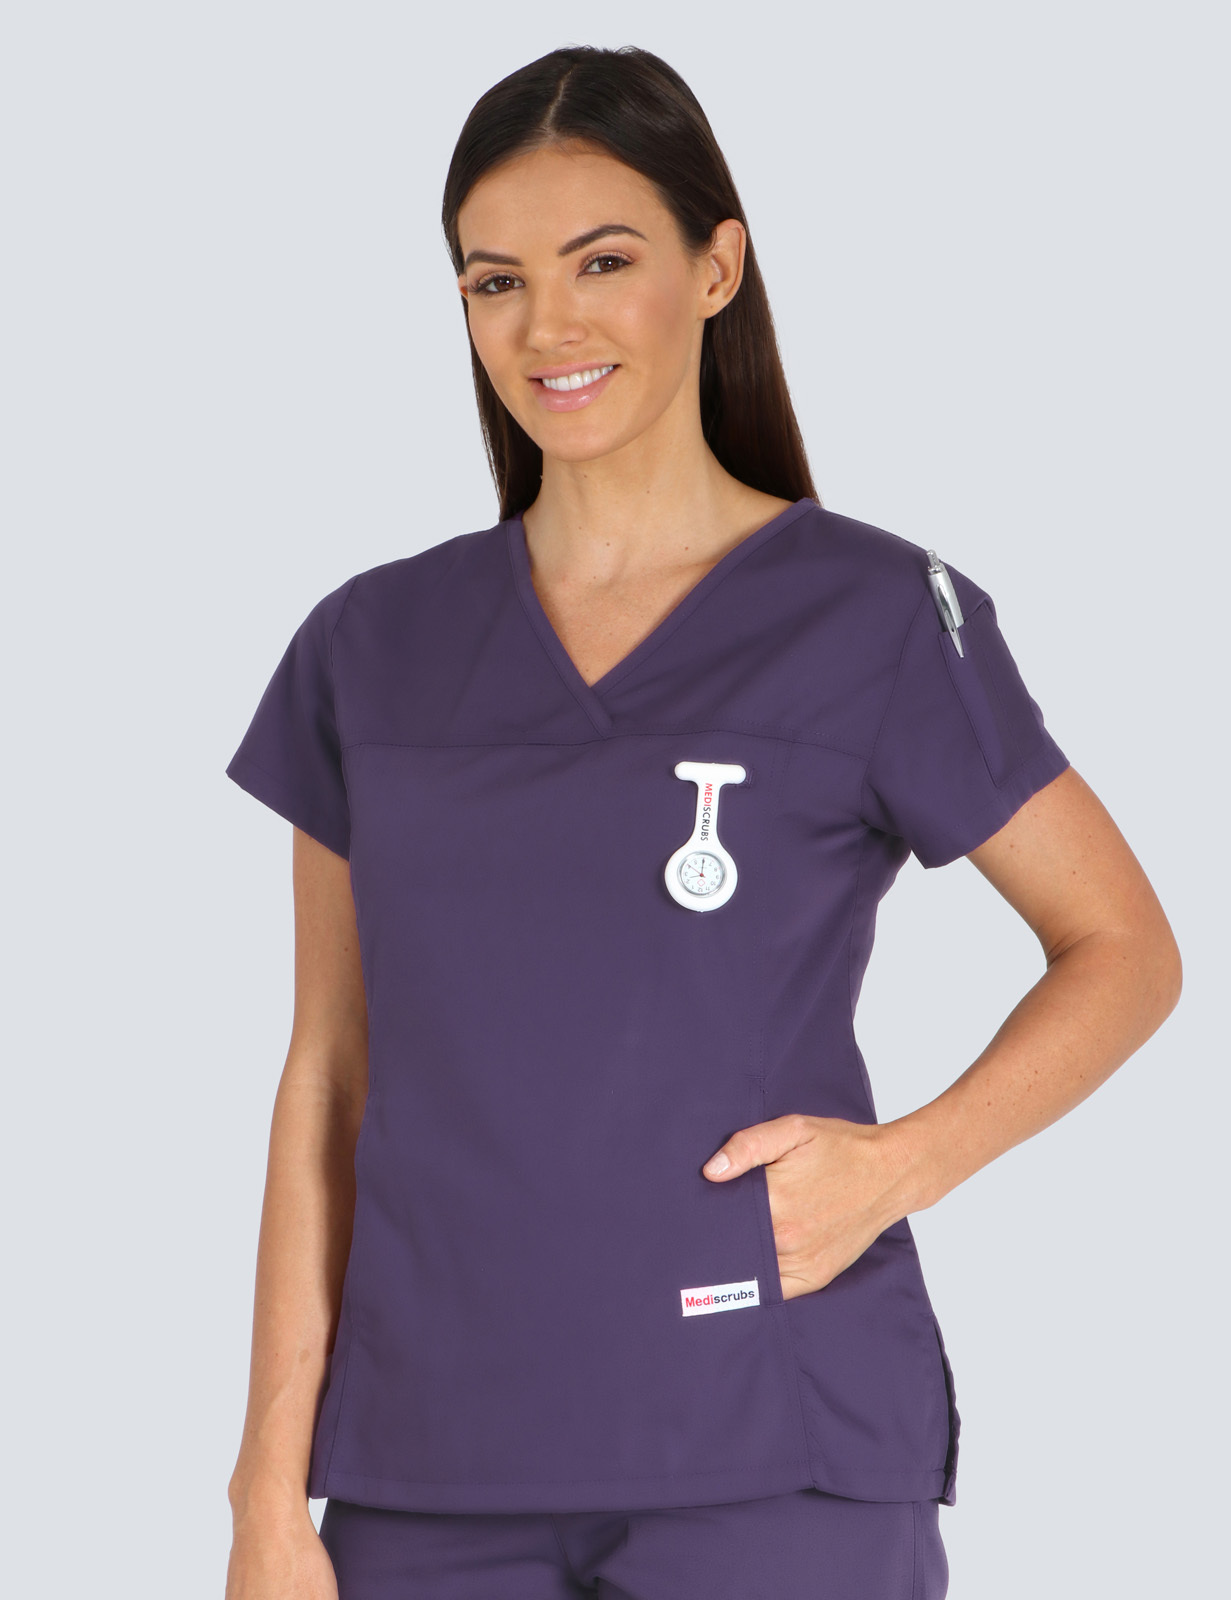 Peninsula Health - Dialysis UM (Women's Fit Solid Scrub Top in Aubergine incl Logos)